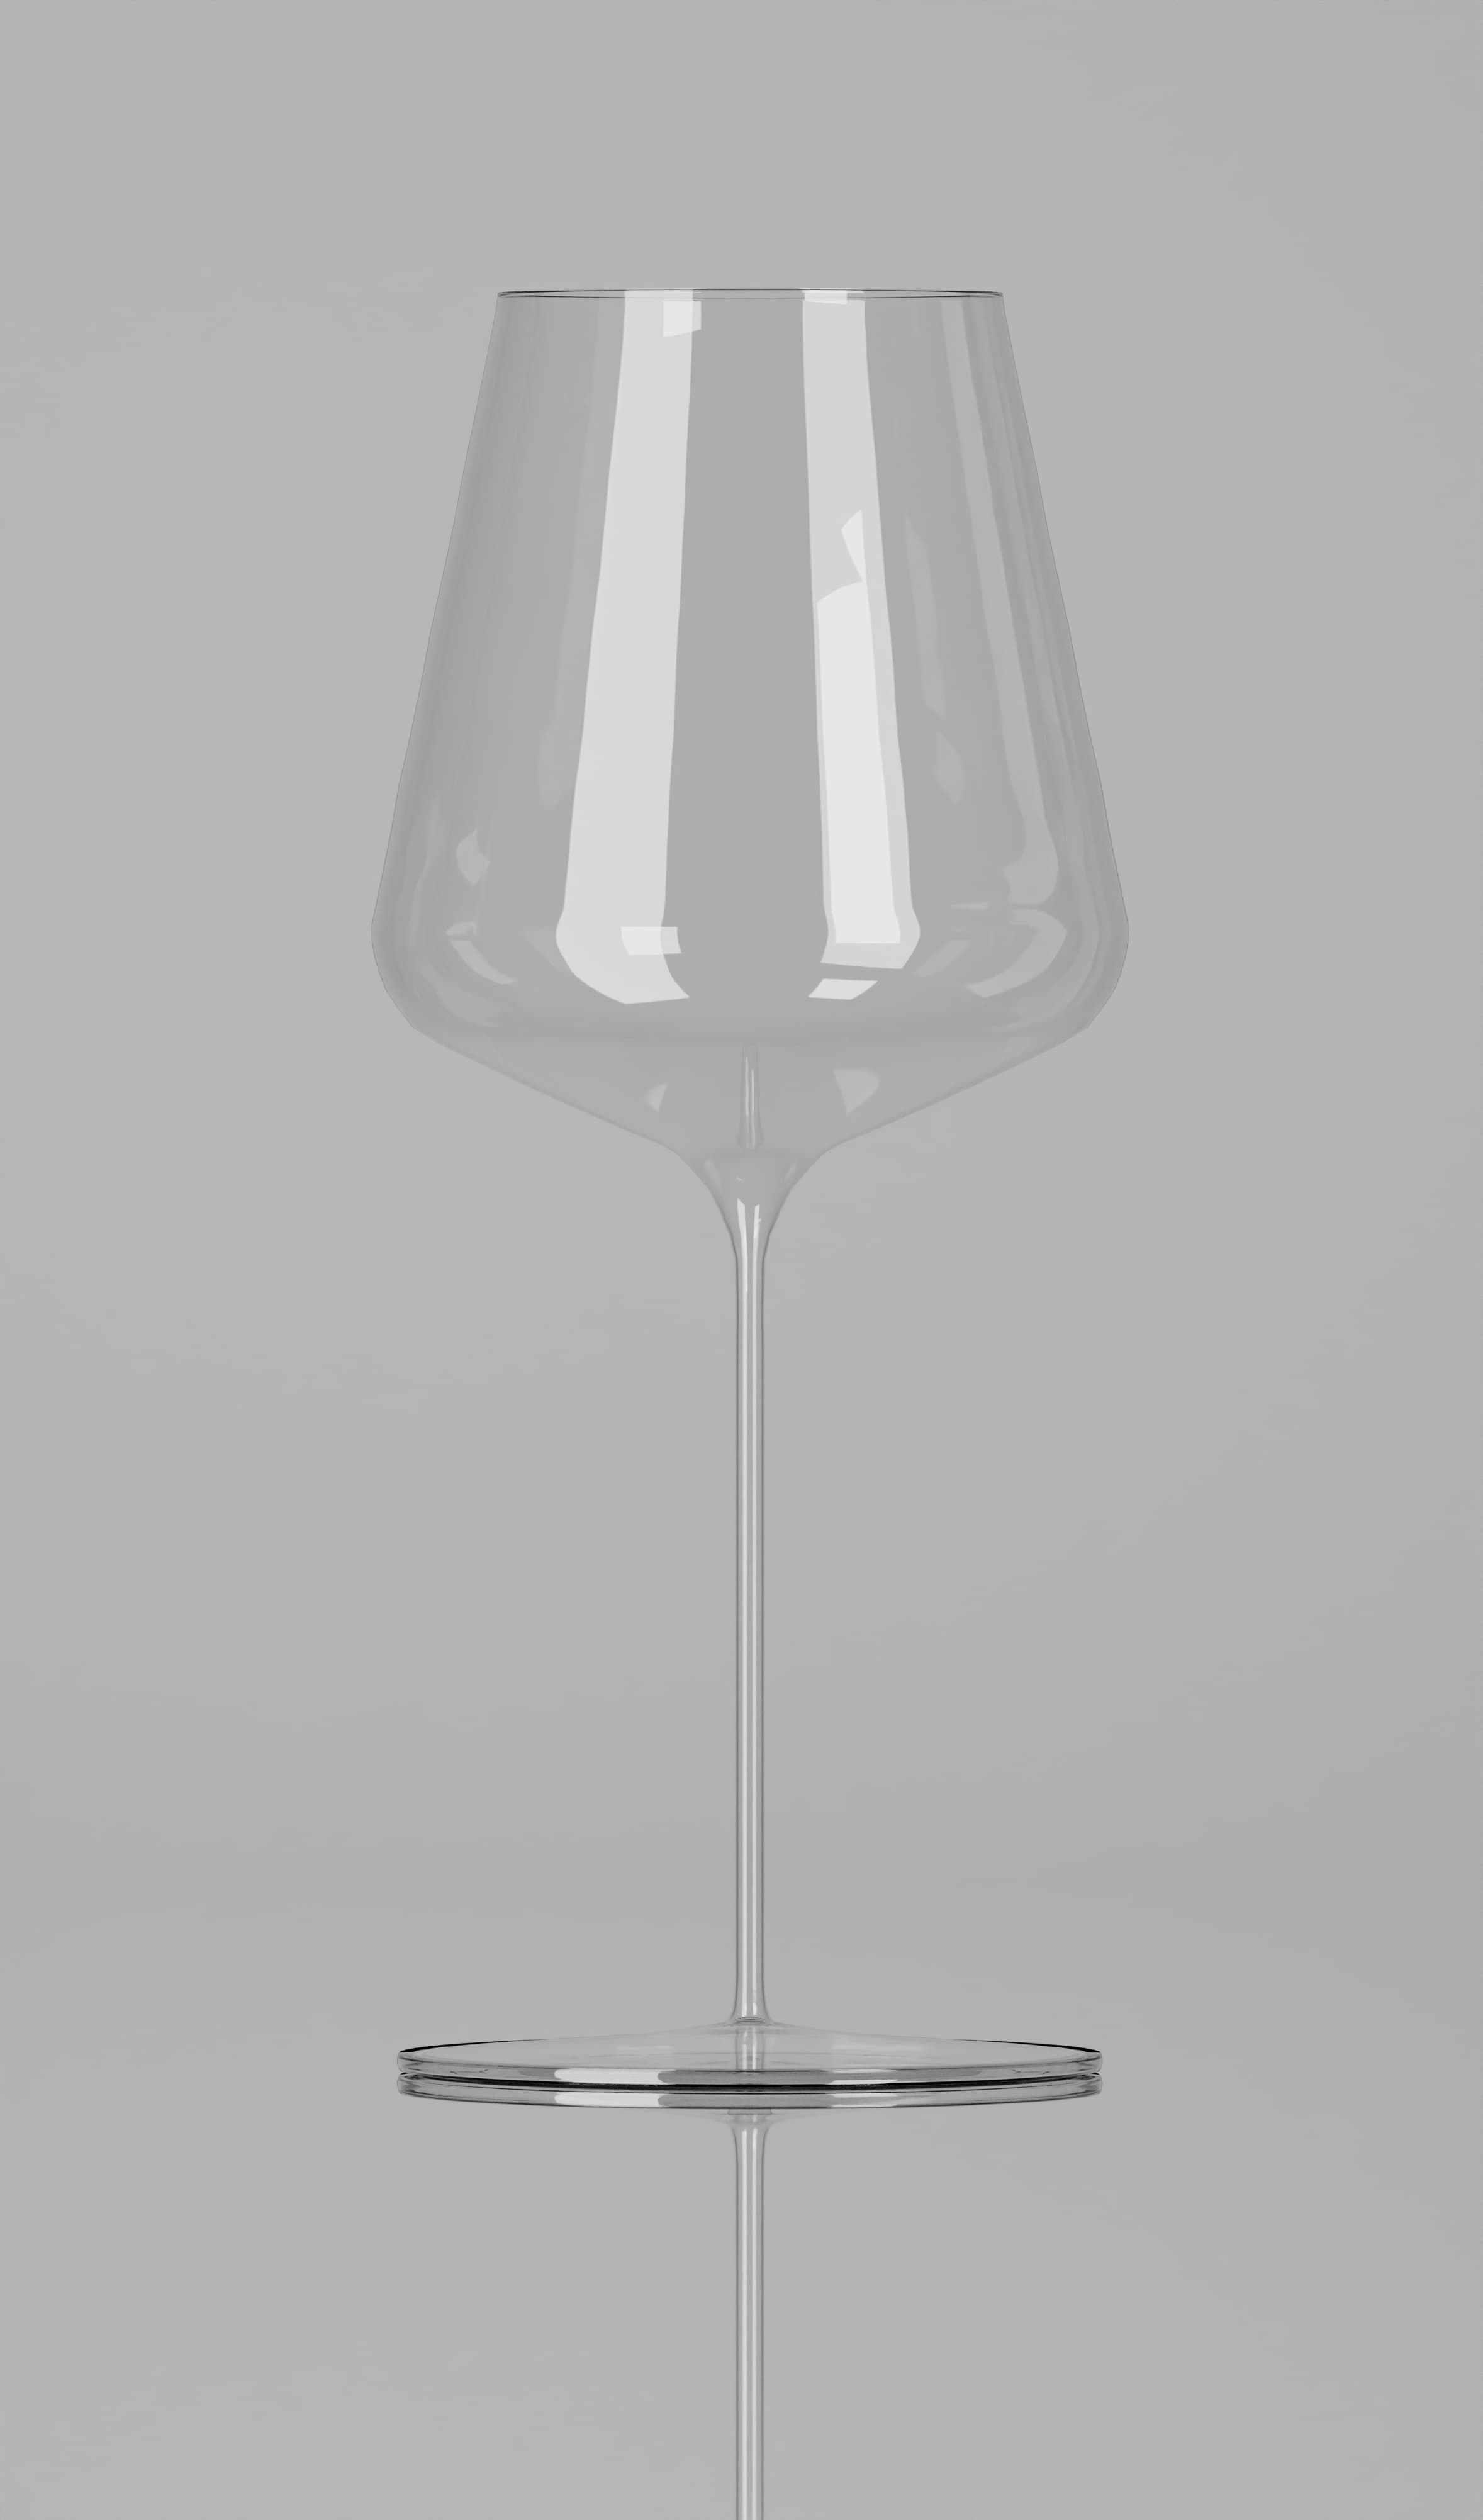 Tillman Glass - handblown wine glasses